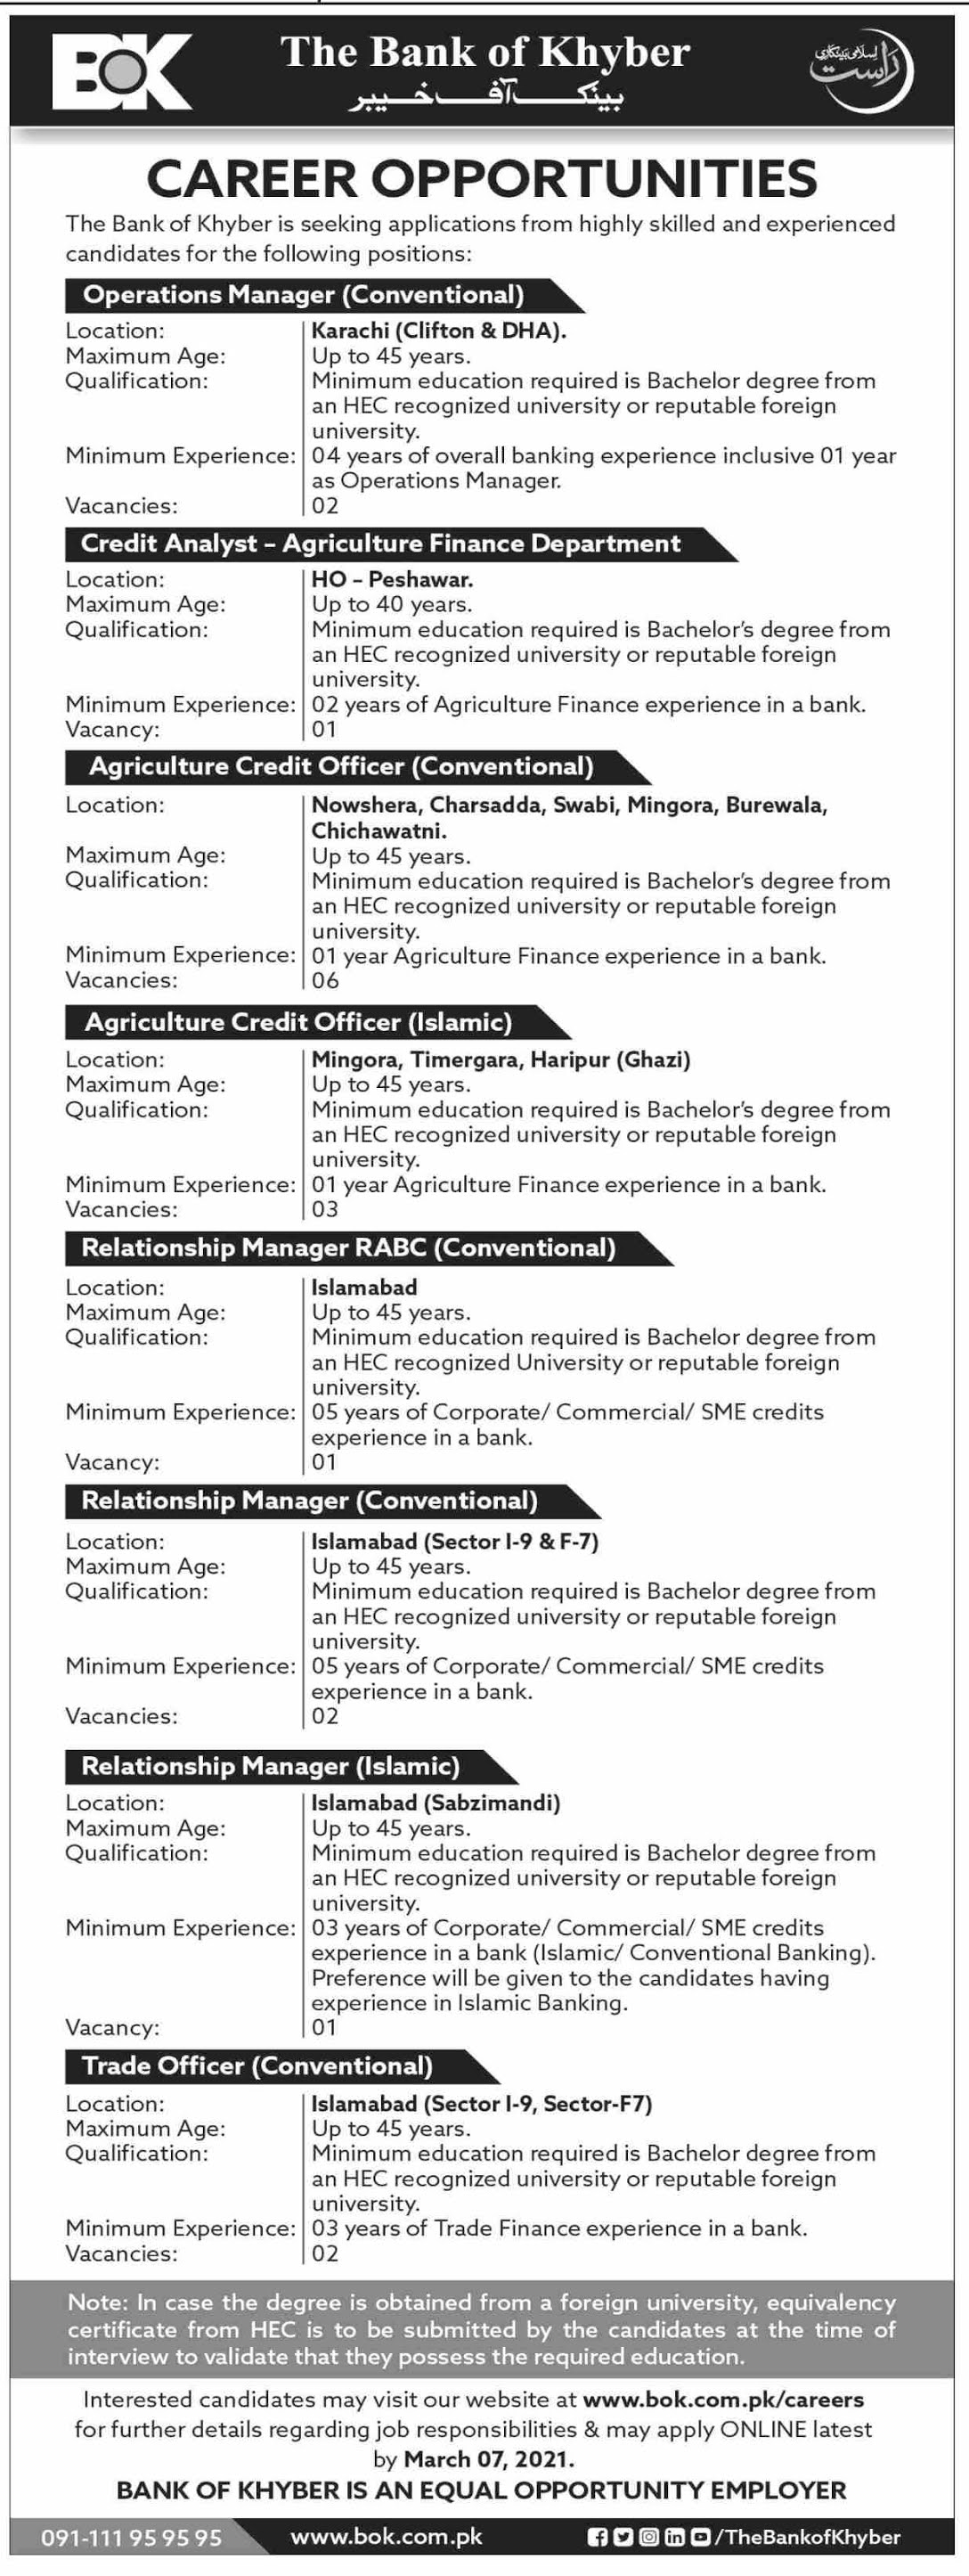 BOK Jobs Advertisement - Bank of Khyber Jobs Career - BOK Jobs 2021 - BOK Careers 2021 - Bank of Khyber Jobs 2021 - Online Apply - www.bok.com.pk/careers